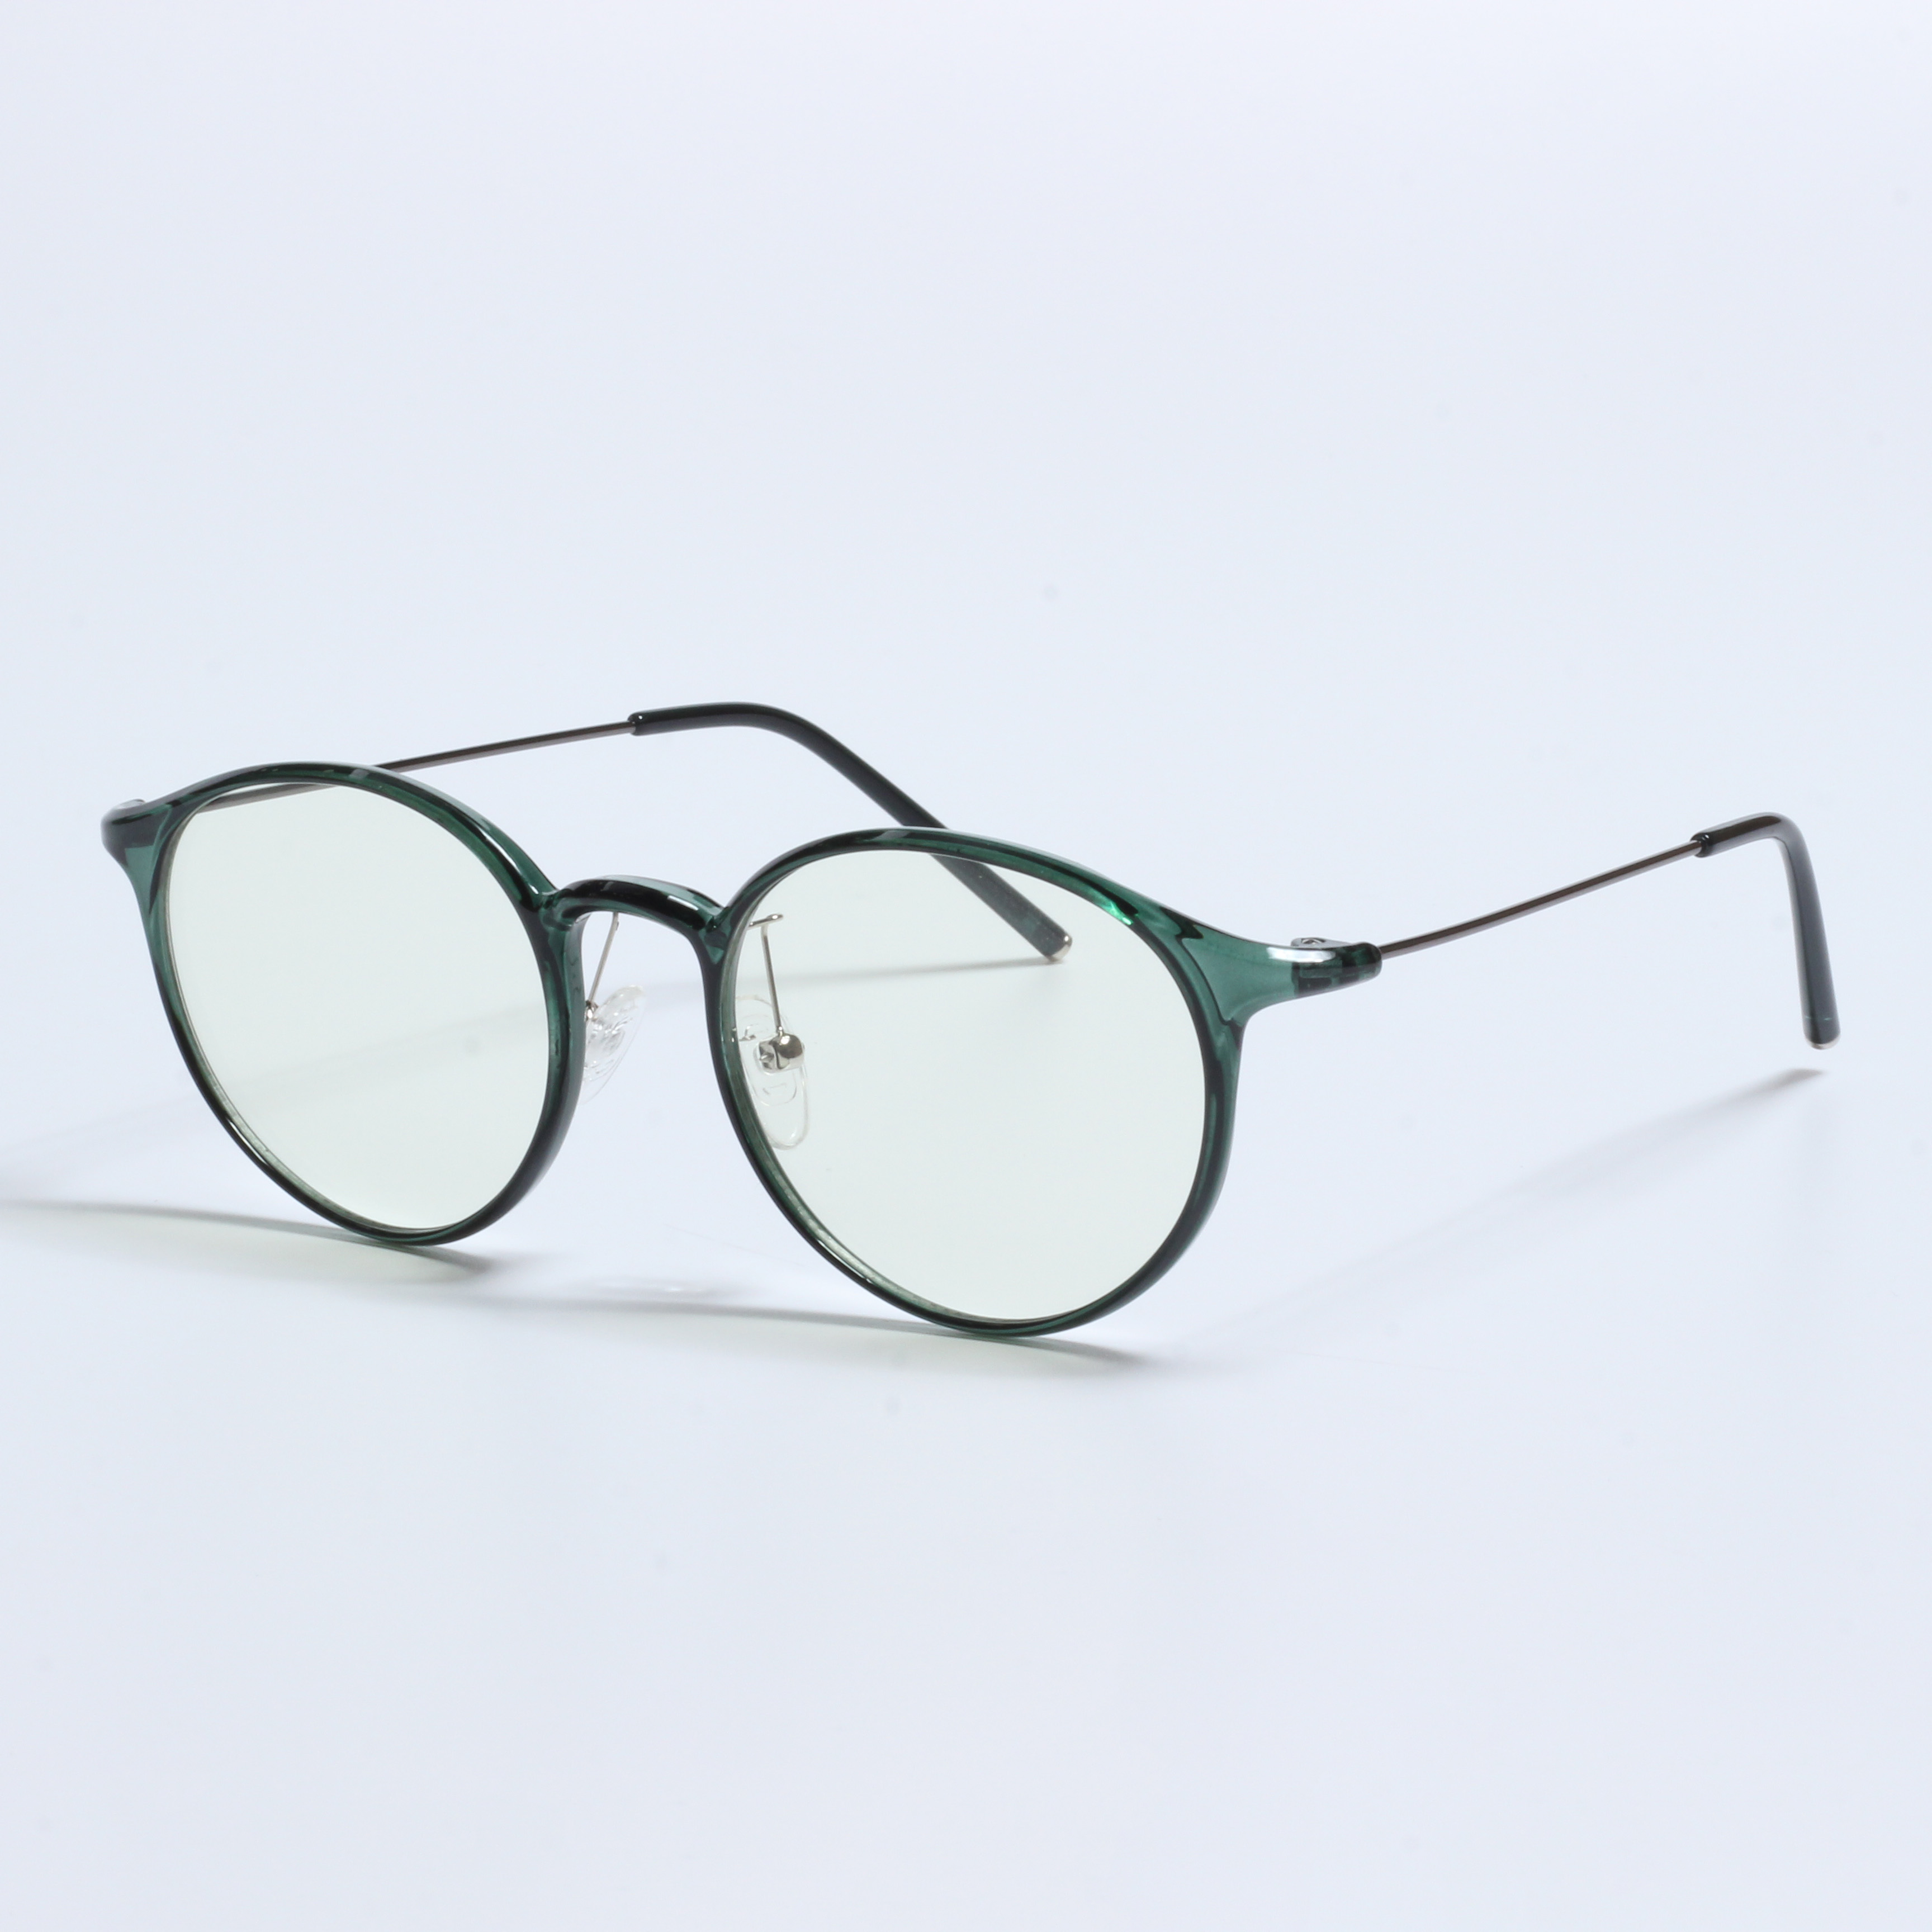 China Factory Wholesale New Cheapest Blue Blocker Glasses (11)